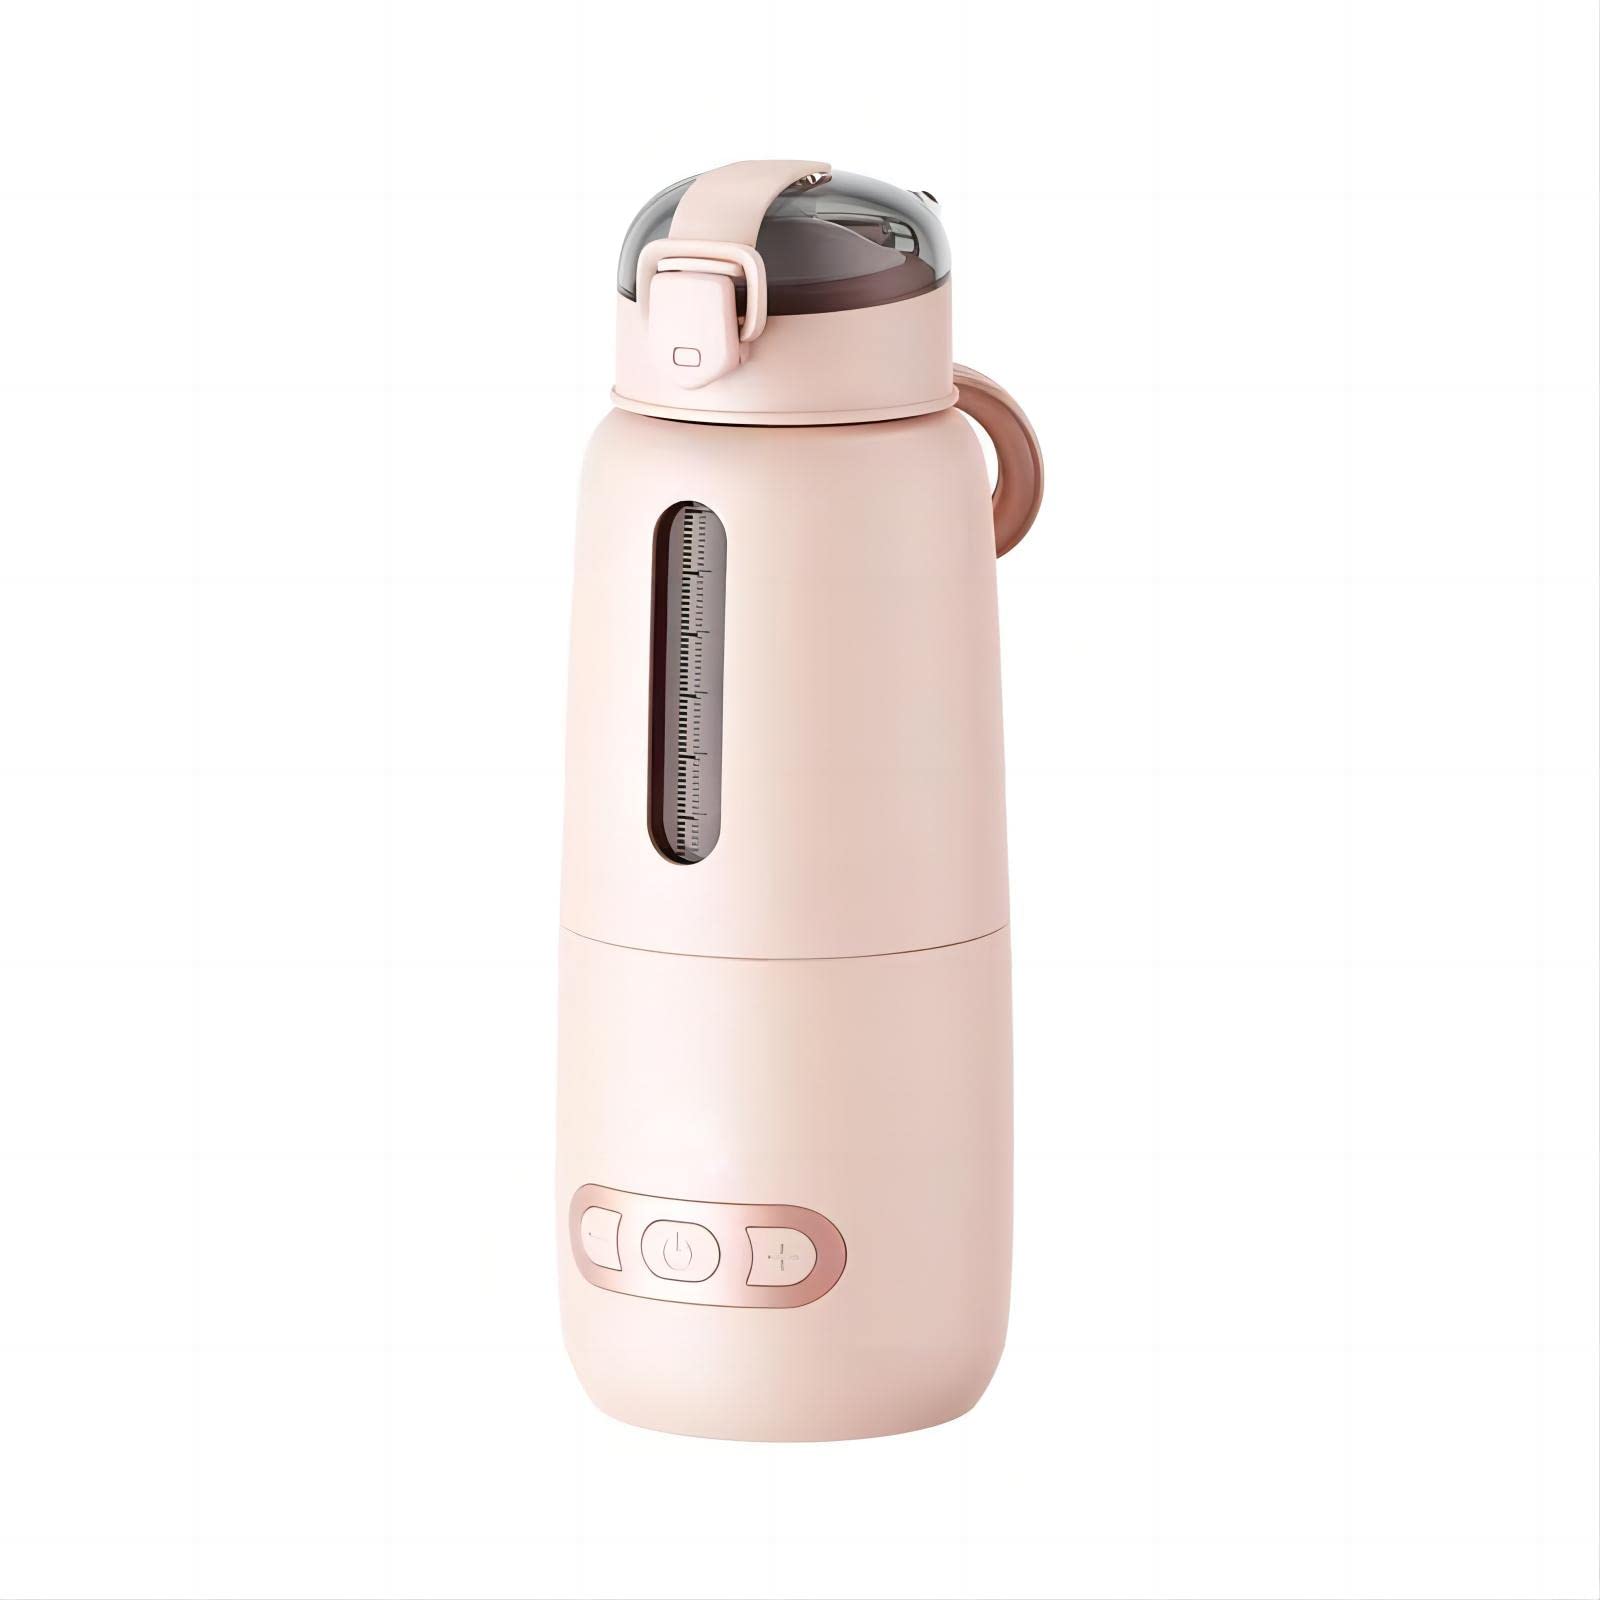 Portable Water Warmer for Formula, Breastmilk, Precise Temperature Control